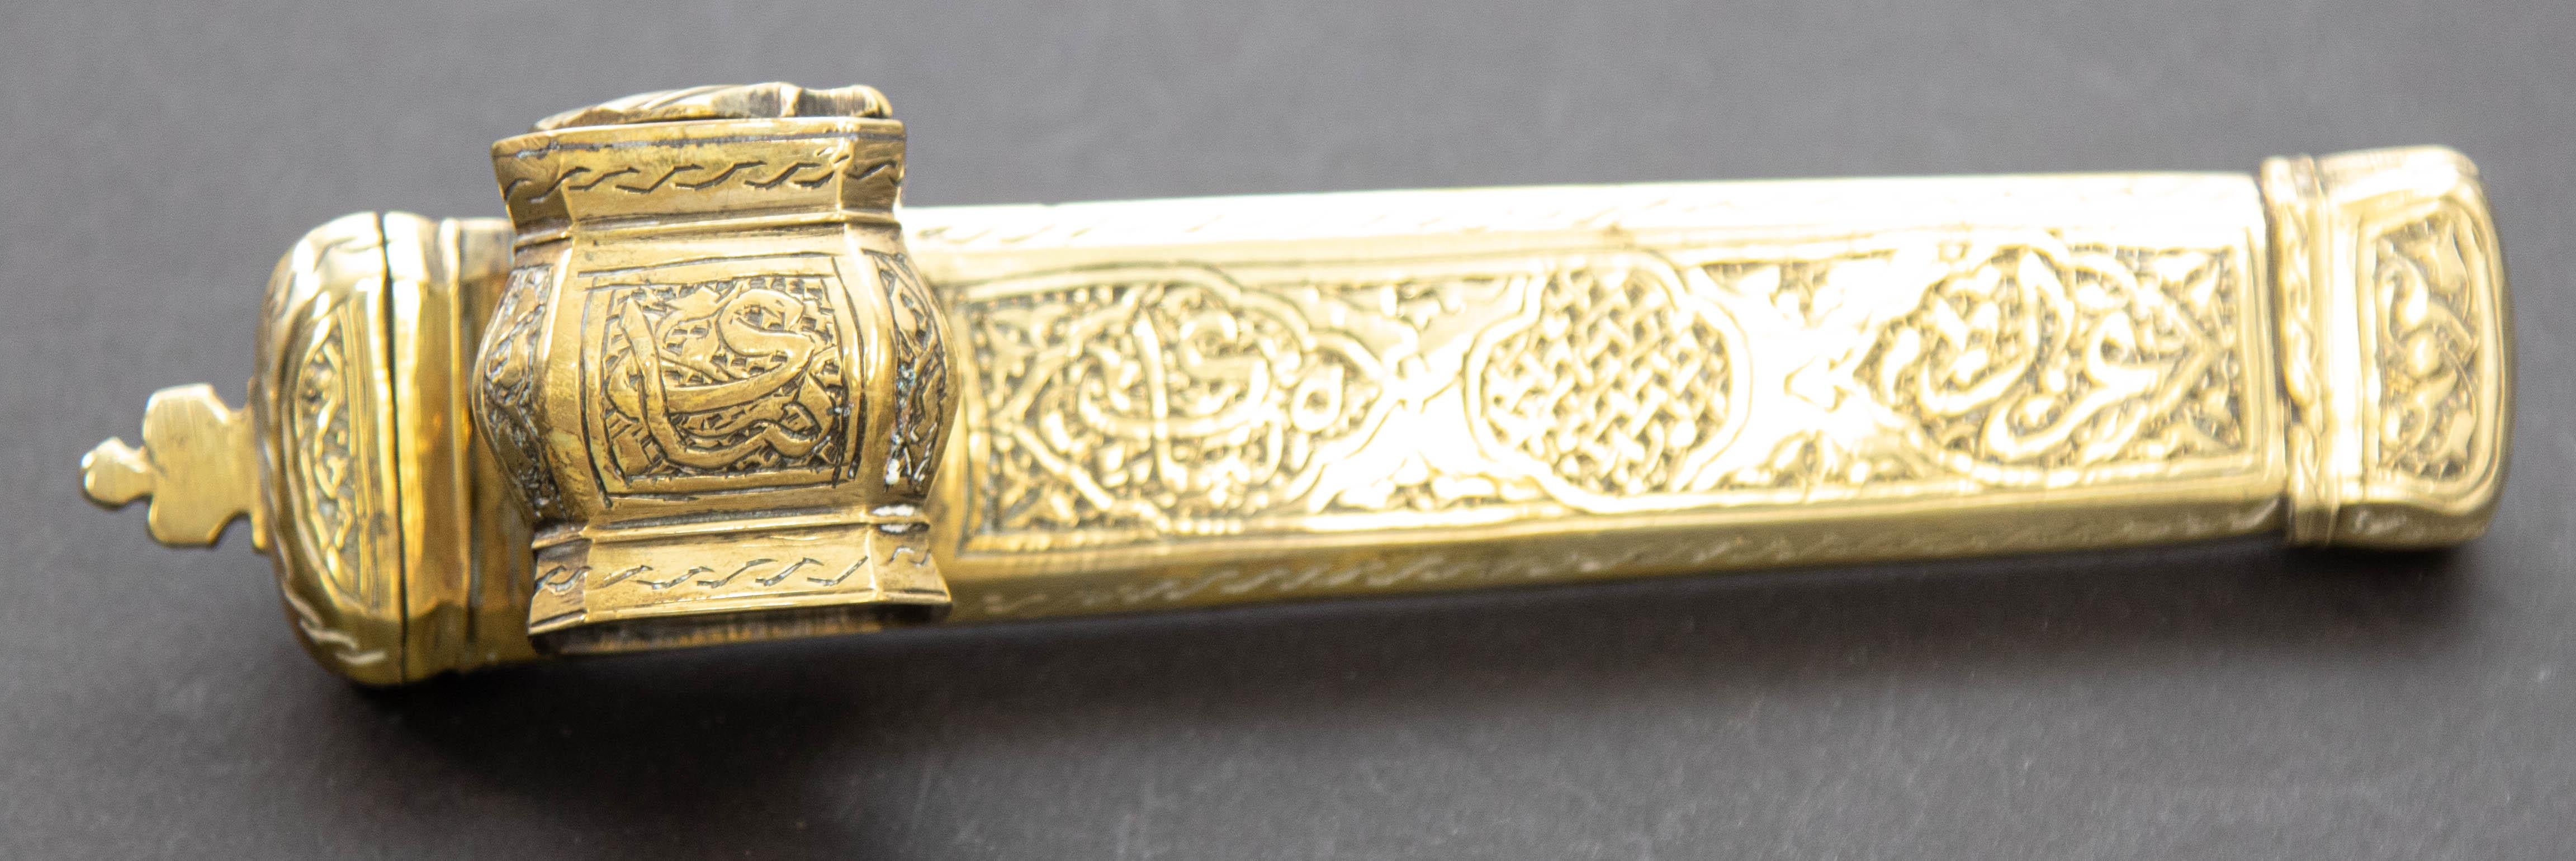 Antique Ottoman Turkish Brass Inkwell Qalamdan with Arabic Calligraphy Writing For Sale 8